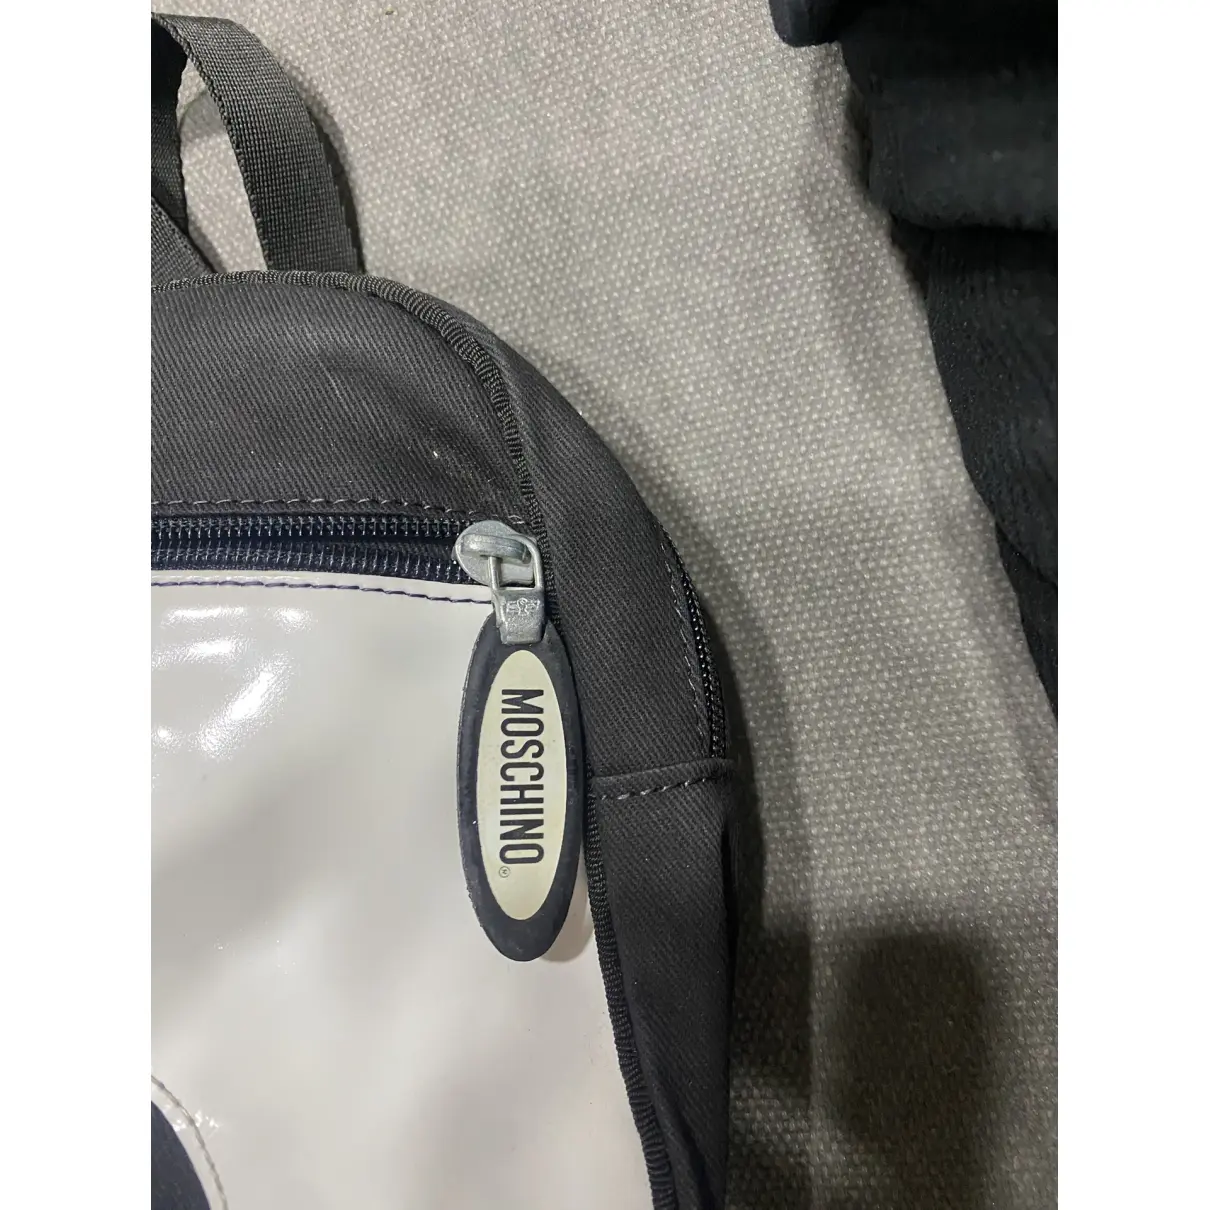 Buy Moschino Backpack online